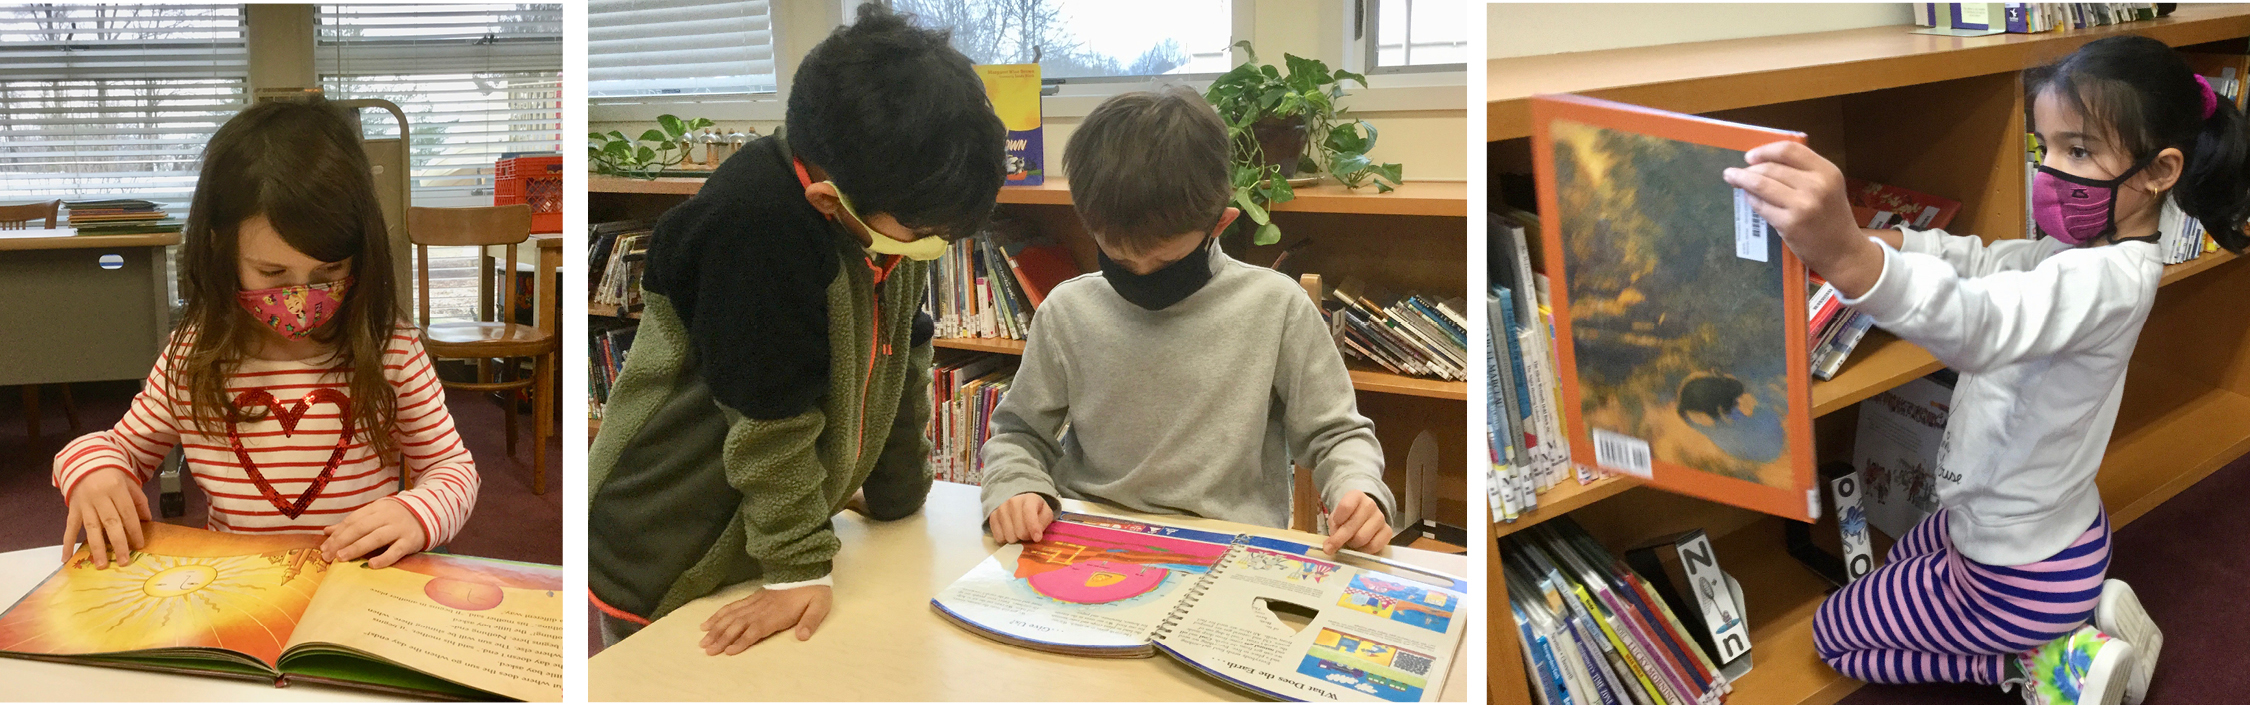 Scholastic Book Club - Princeton Montessori School